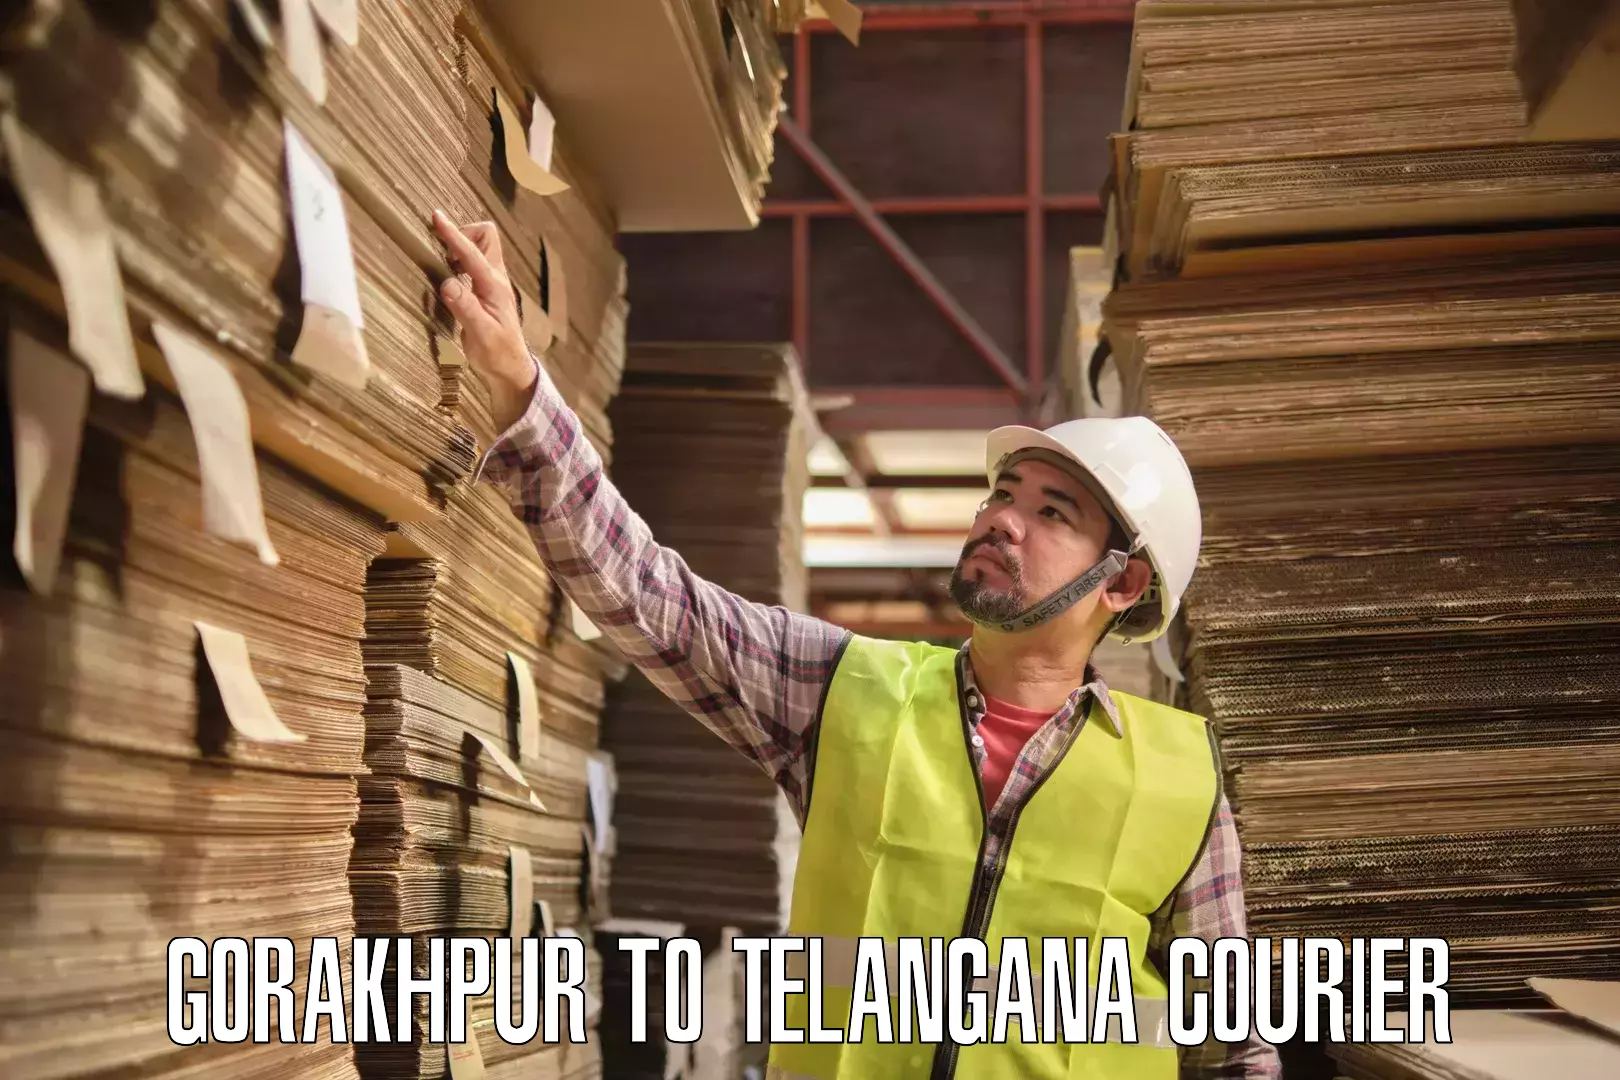 Reliable courier service Gorakhpur to Telangana